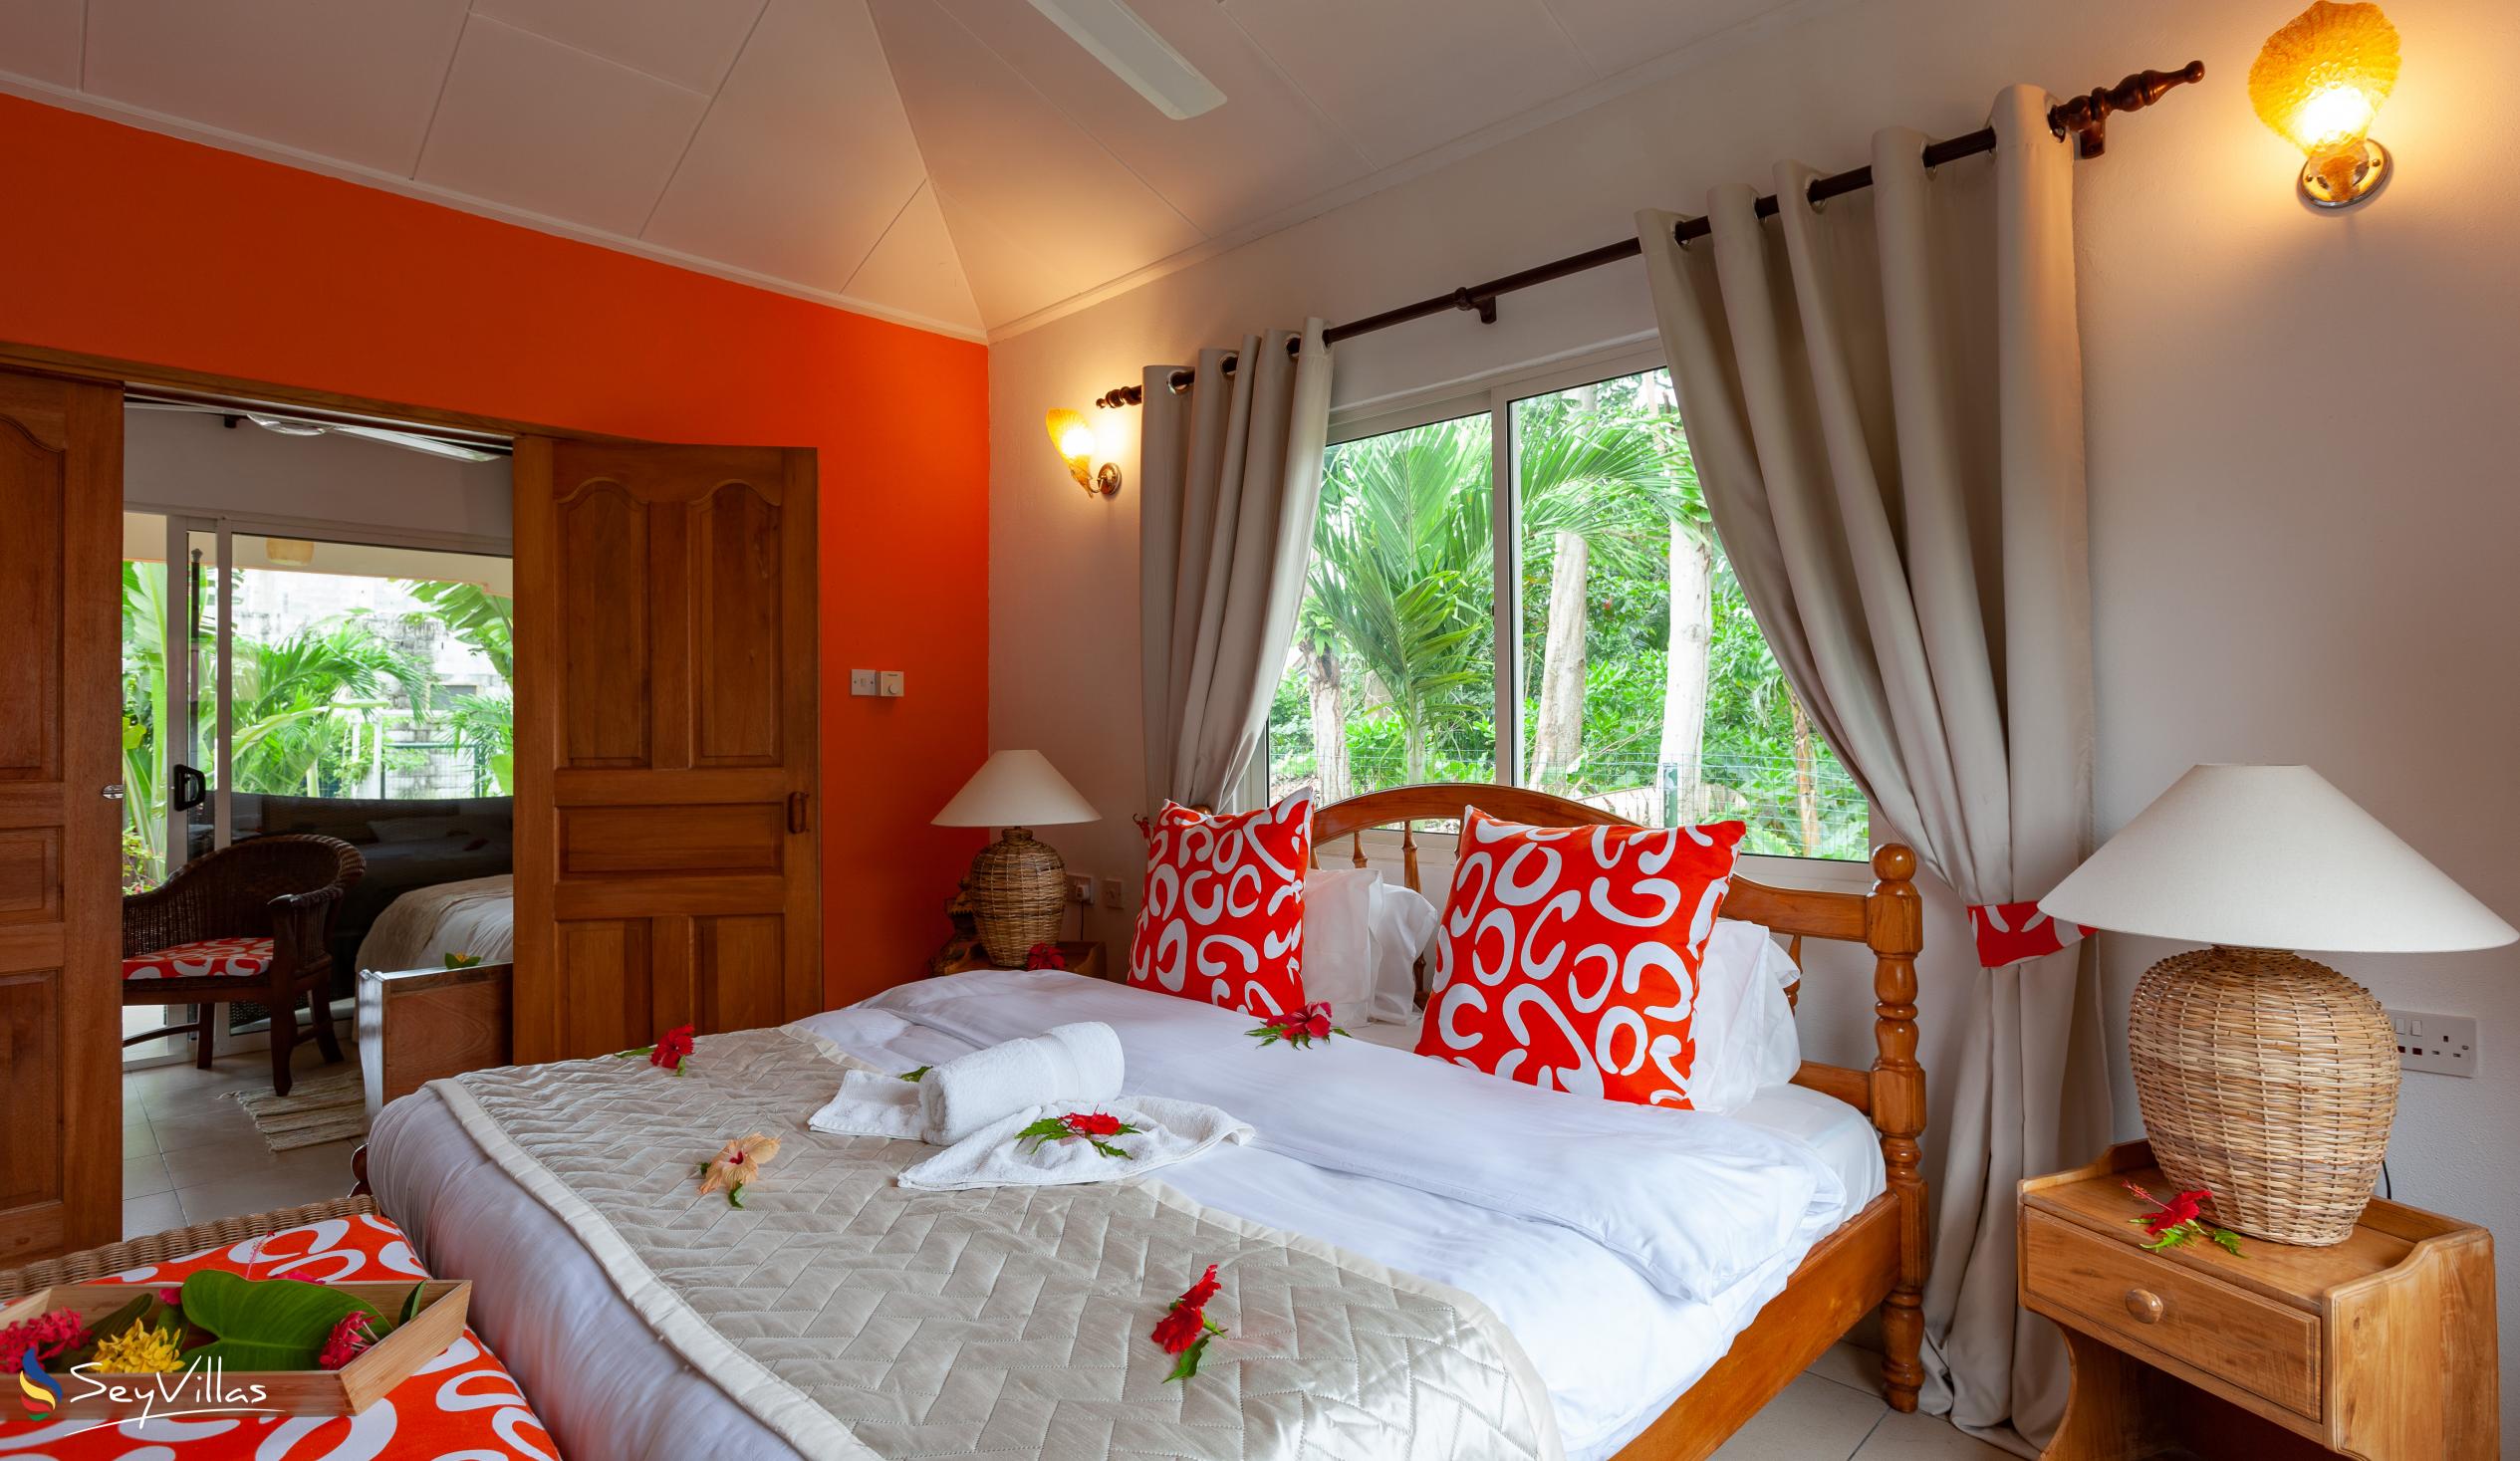 Photo 36: Oceane L'Union Villa - Villa - La Digue (Seychelles)